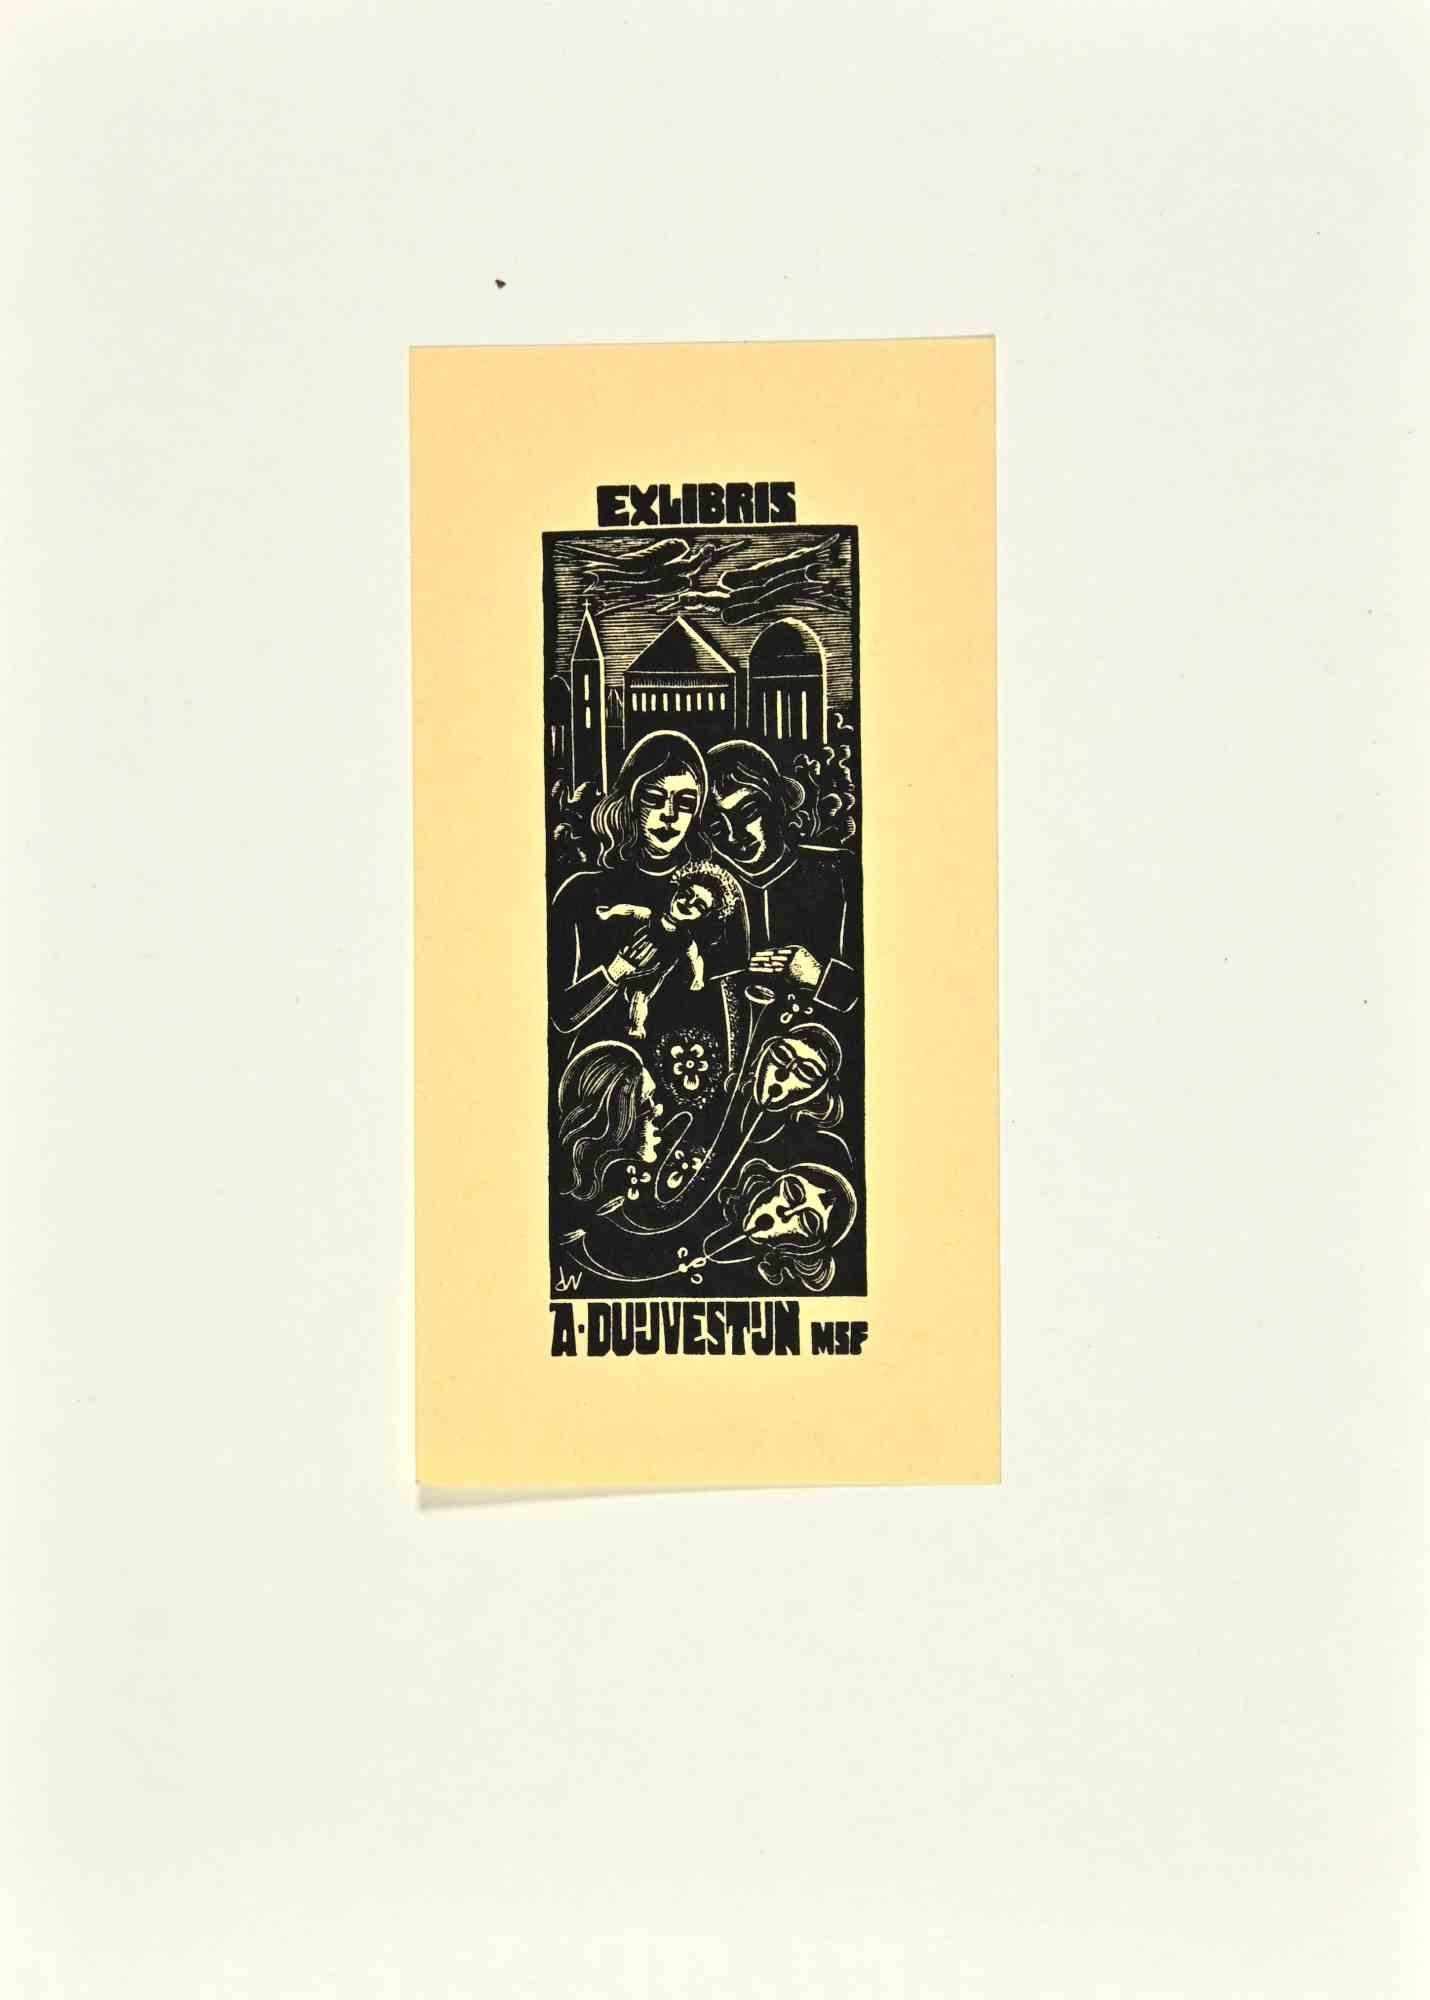 Ex Libris A. Dujvestjn MSF - Woodcut - Mid 20th Century